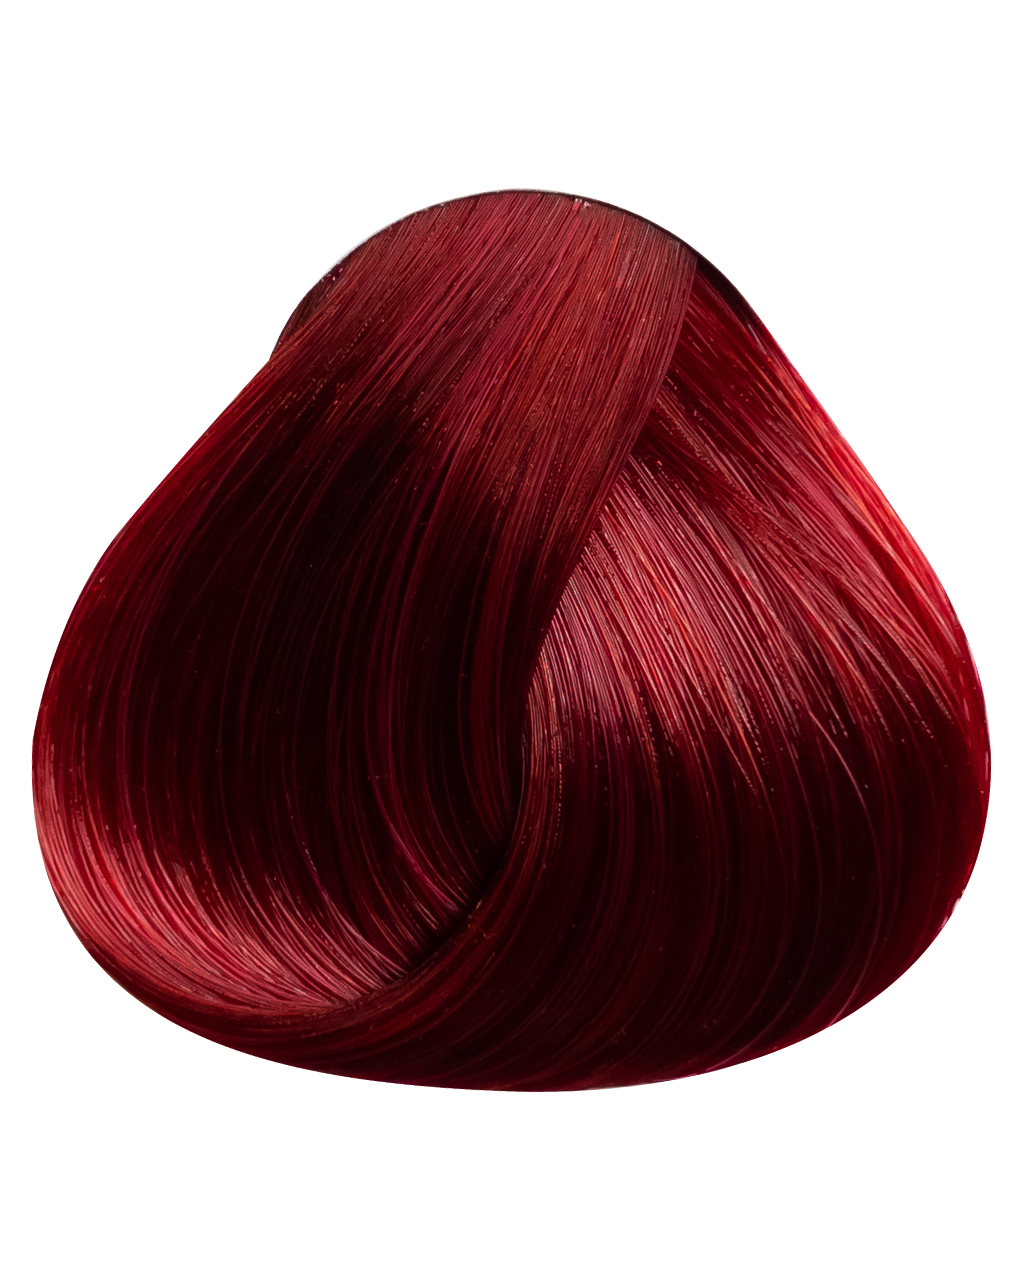 Haarfarbe rot knallig